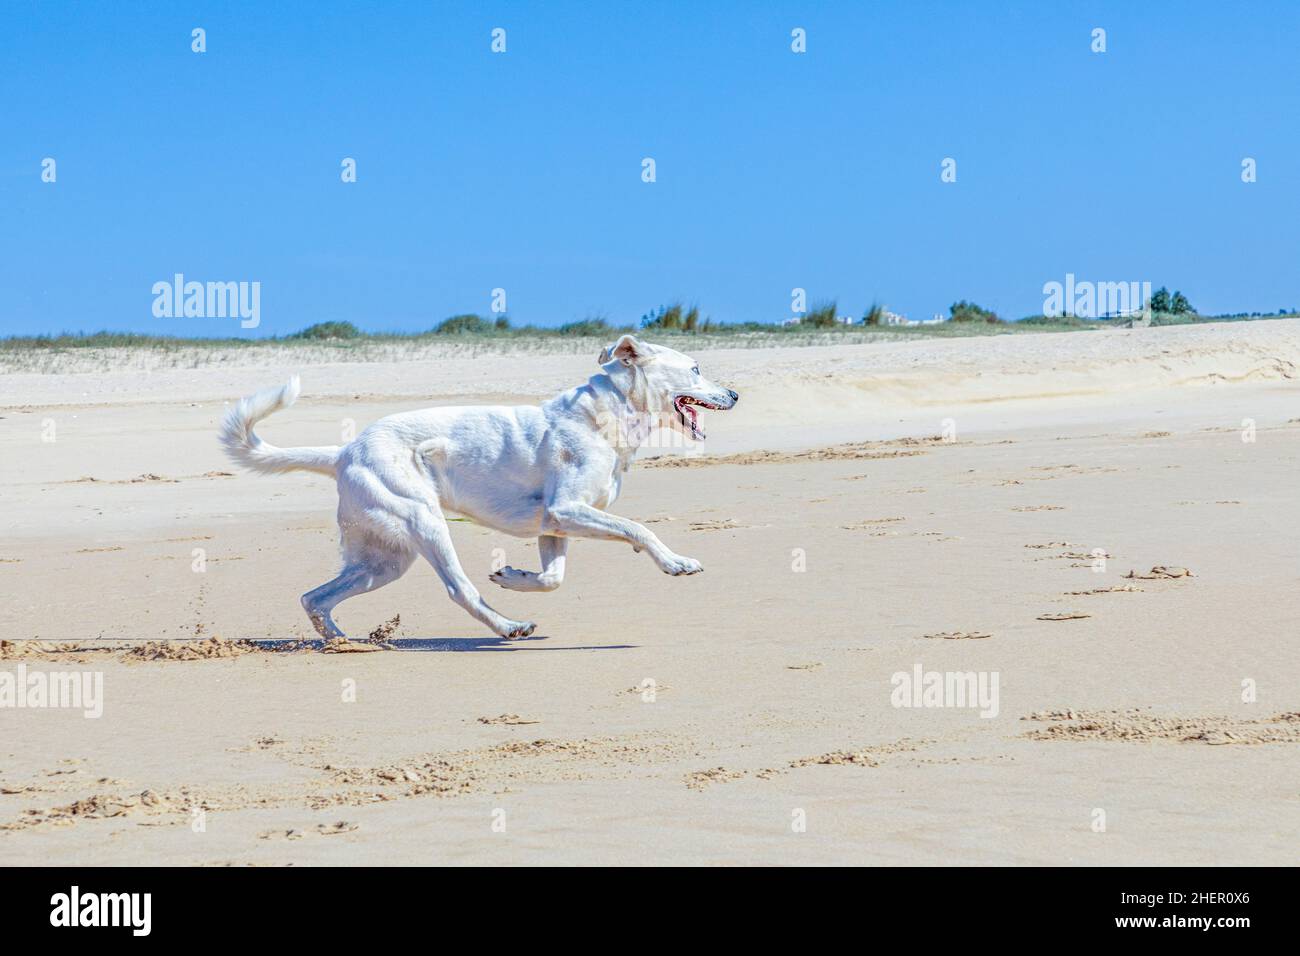 brown Estrela mountain dog runs at the closed beach under clear sky  due to Corona shutdown Stock Photo